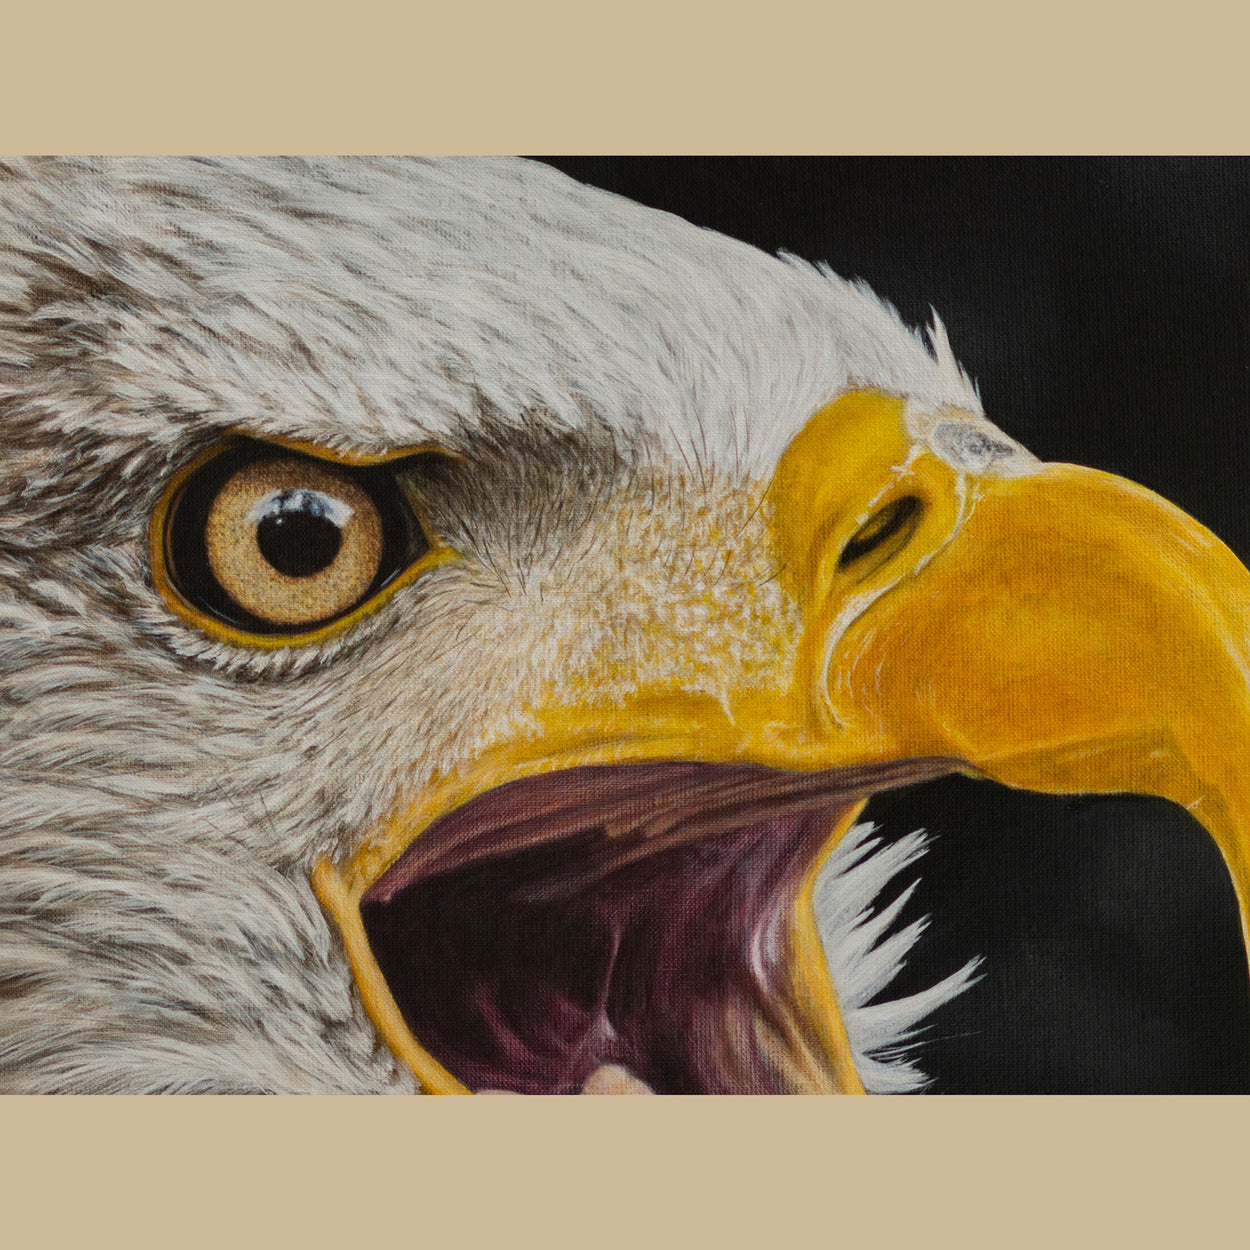 Close up of painting of bald eagle eye and beak